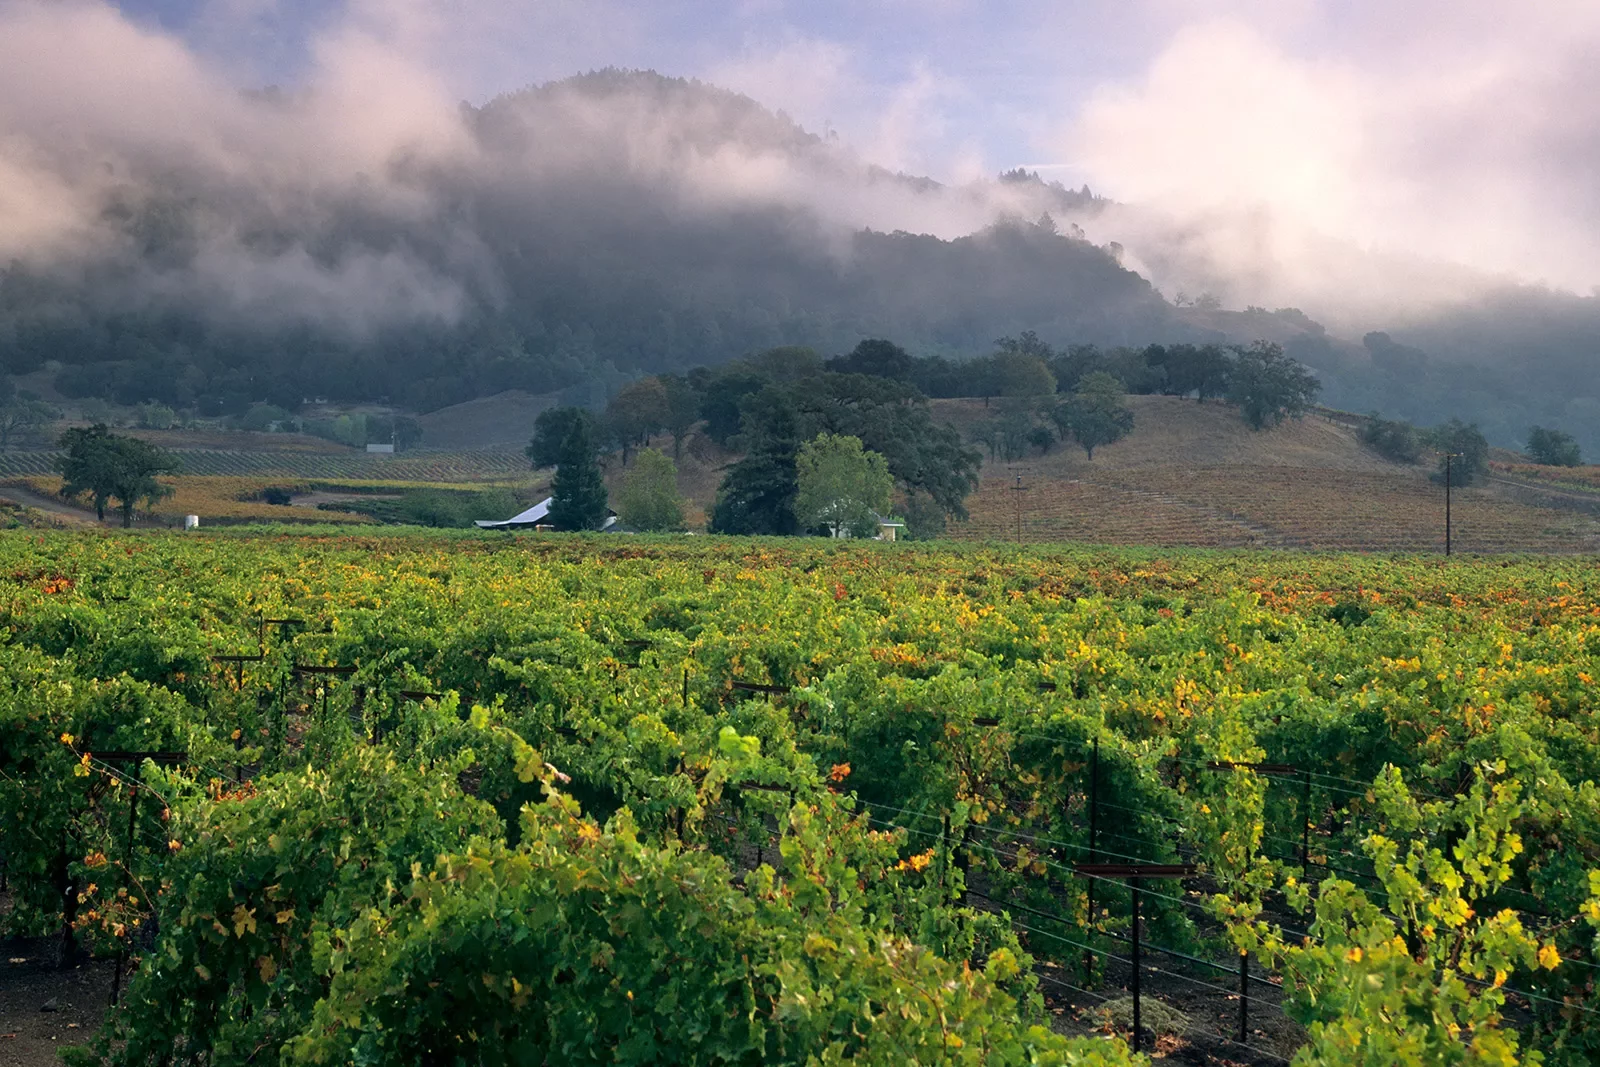 Shot of vineyard, foggy hilltop in distance.